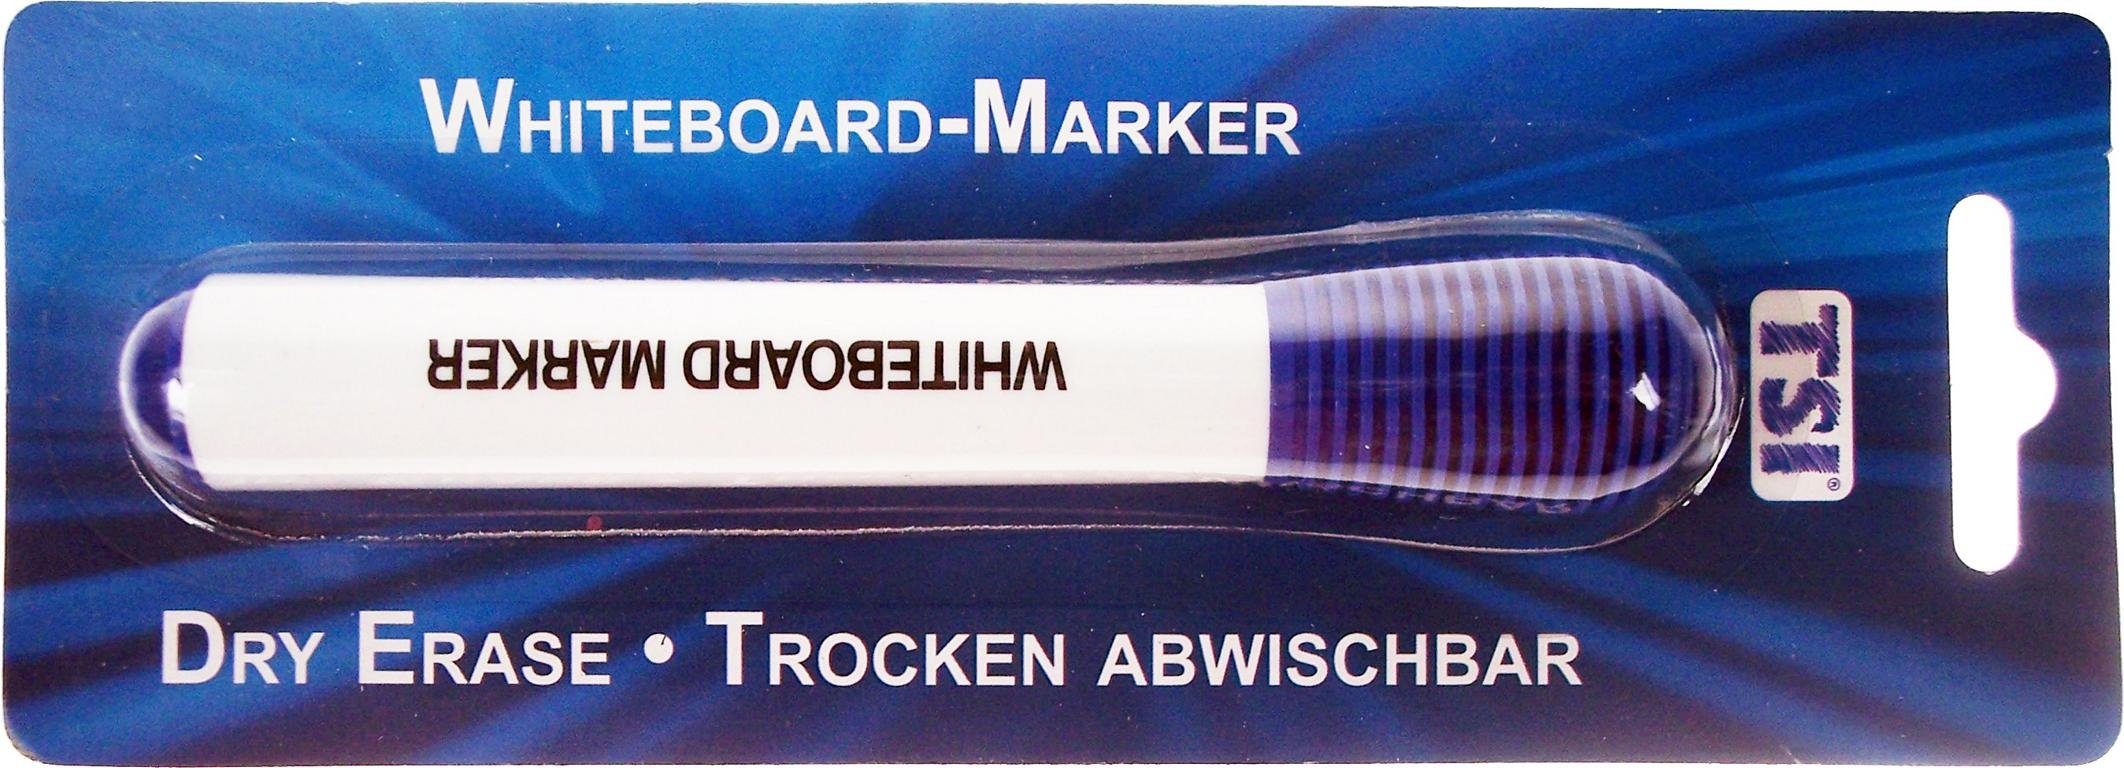 TSI Schreibwaren Marker 5 Whiteboard-Marker / Farbe: blau